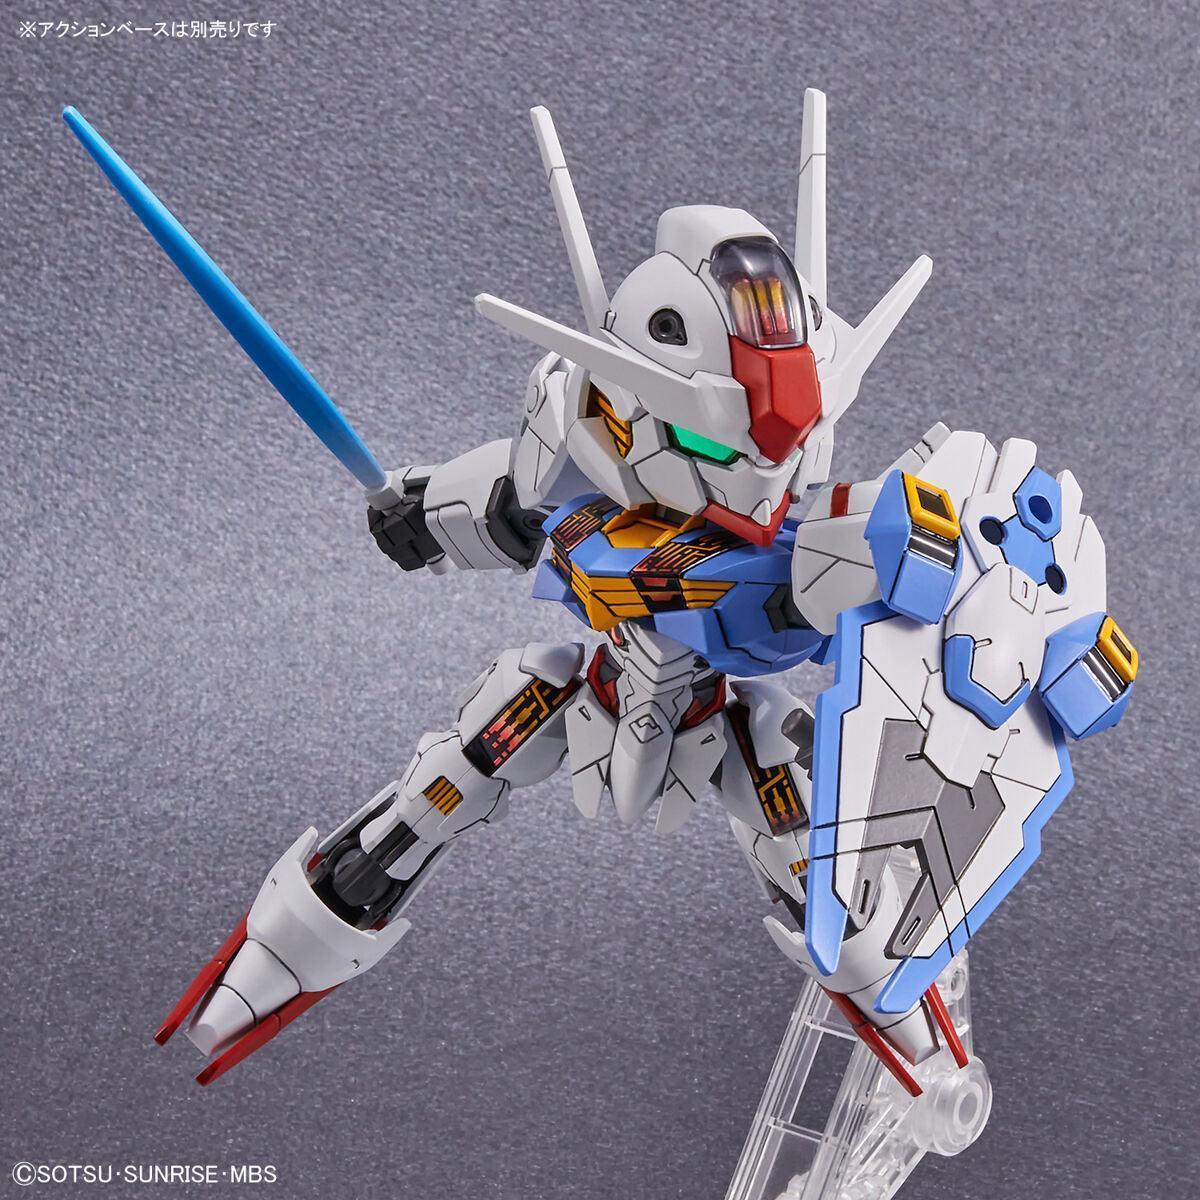 Bandai SD Gundam EX-Standard No.019 XVX-016 Gundam Aerial - Kidultverse